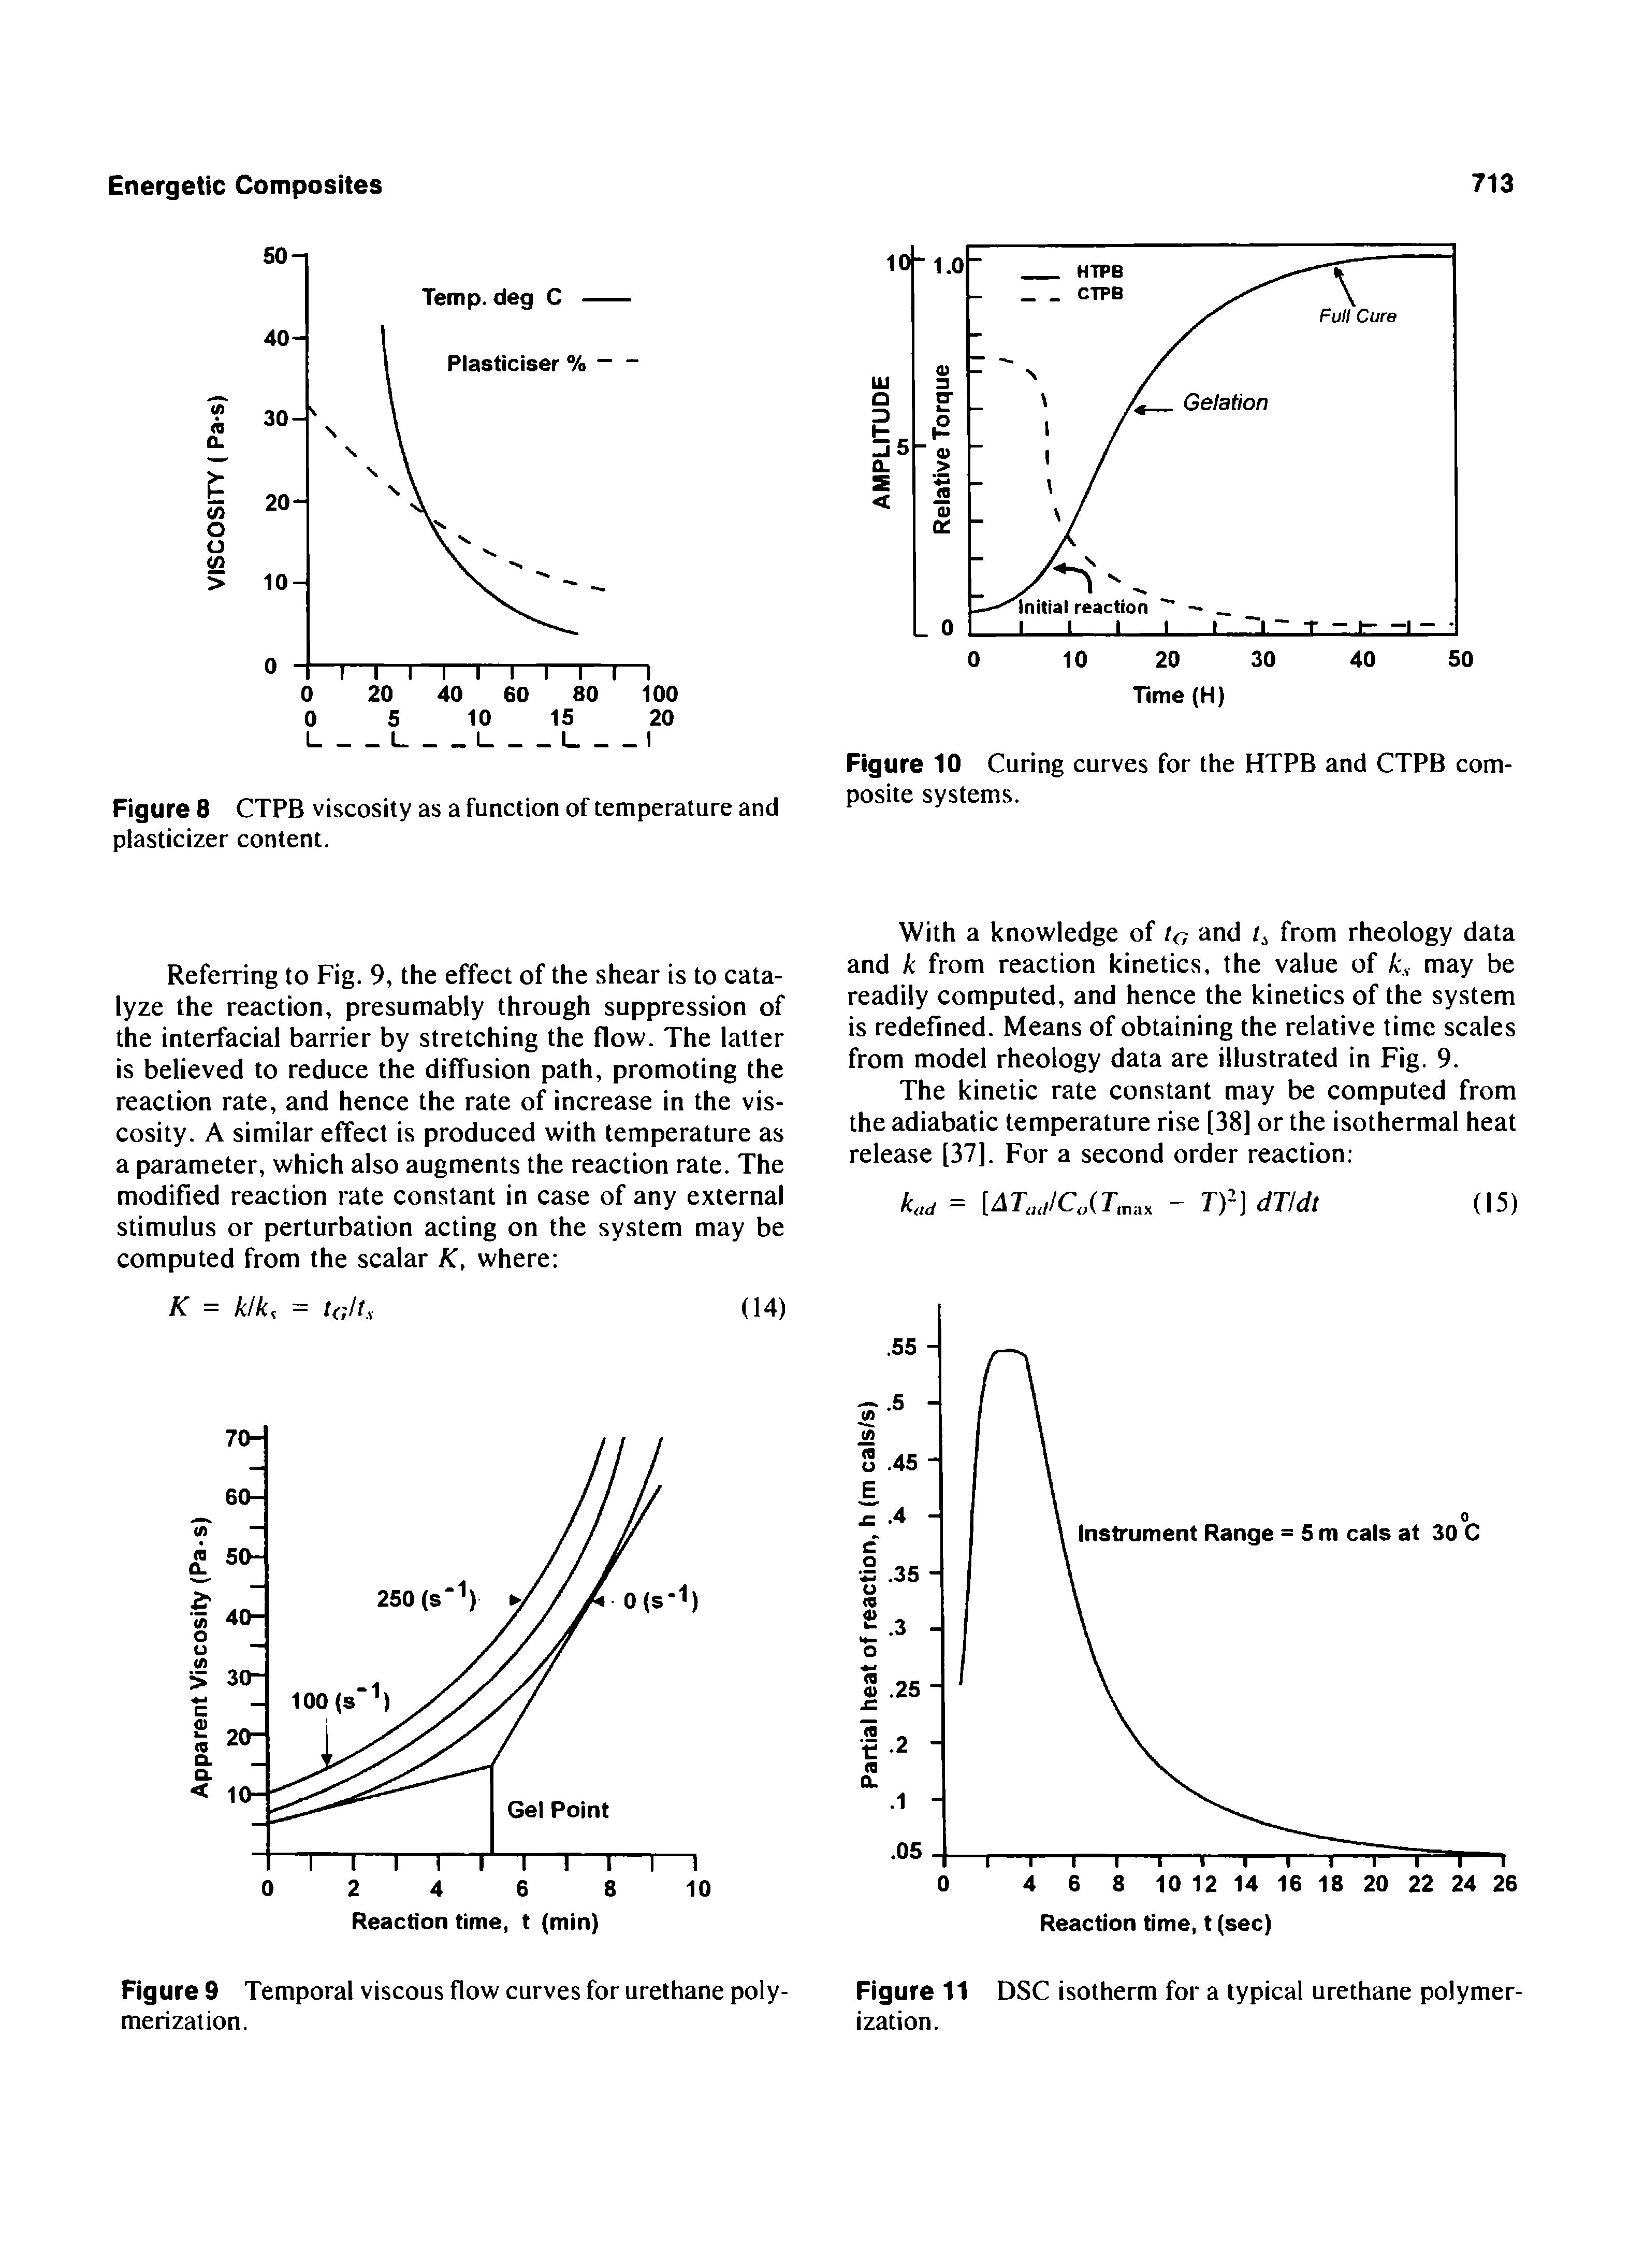 Figure 9 Temporal viscous flow curves for urethane polymerization.